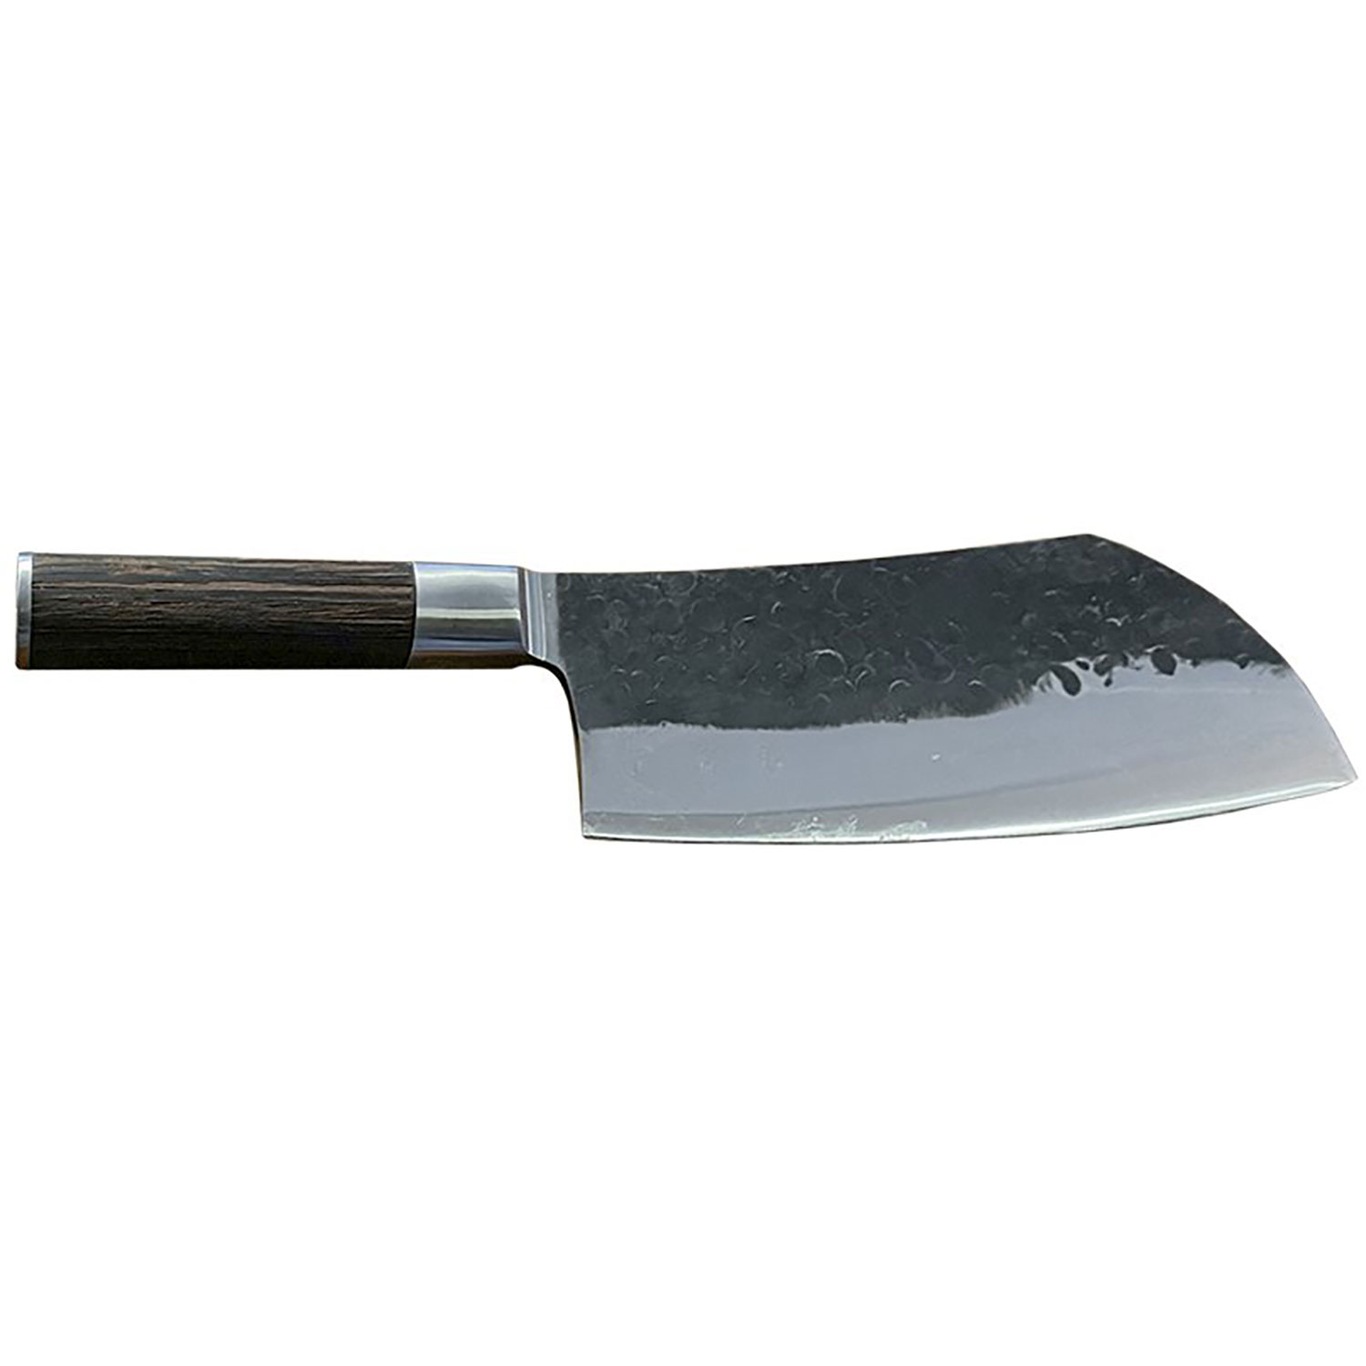 Kuro Mori Knife With Case